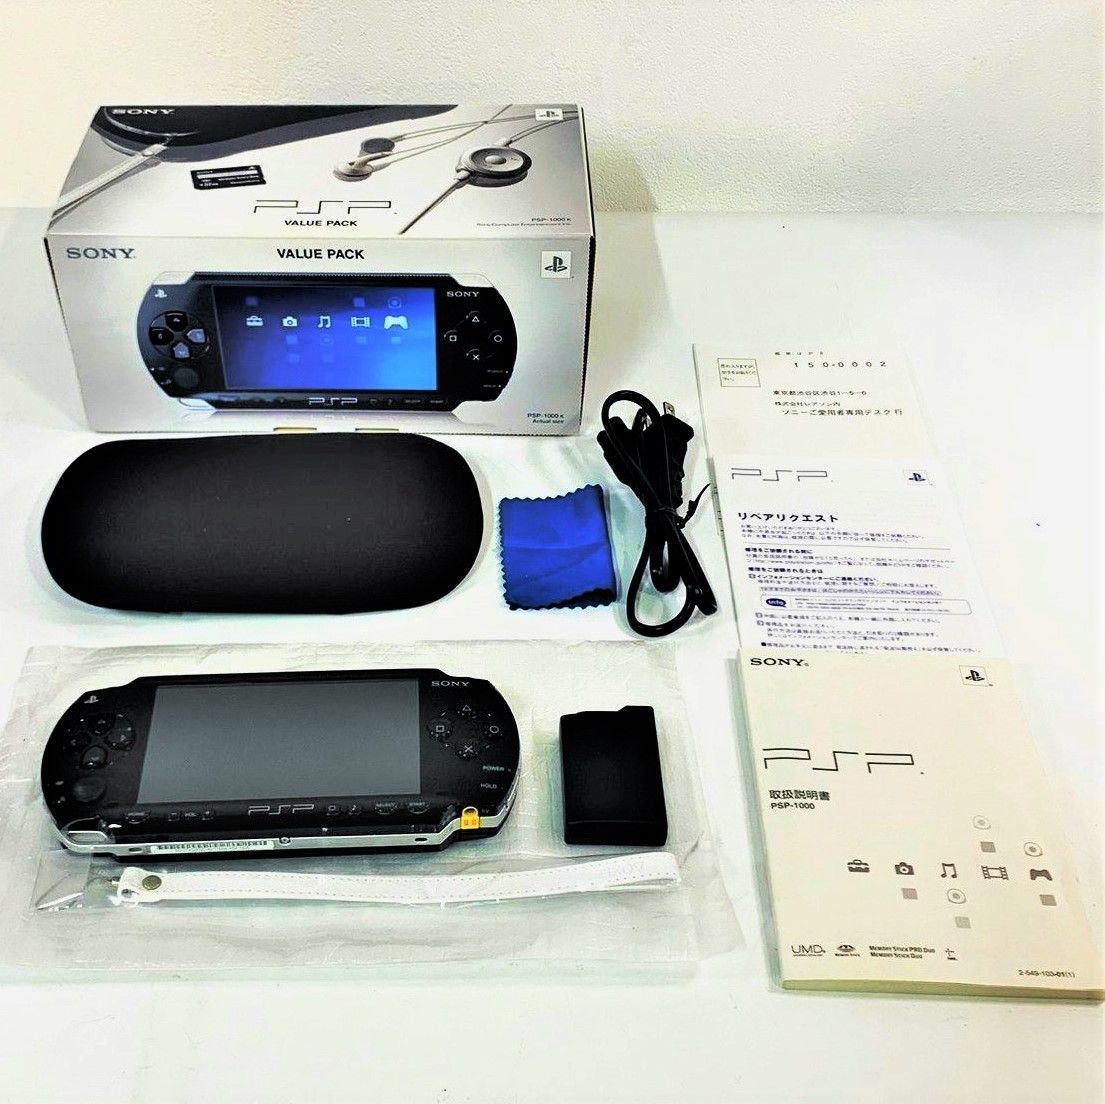 PSP 1000 ブラック